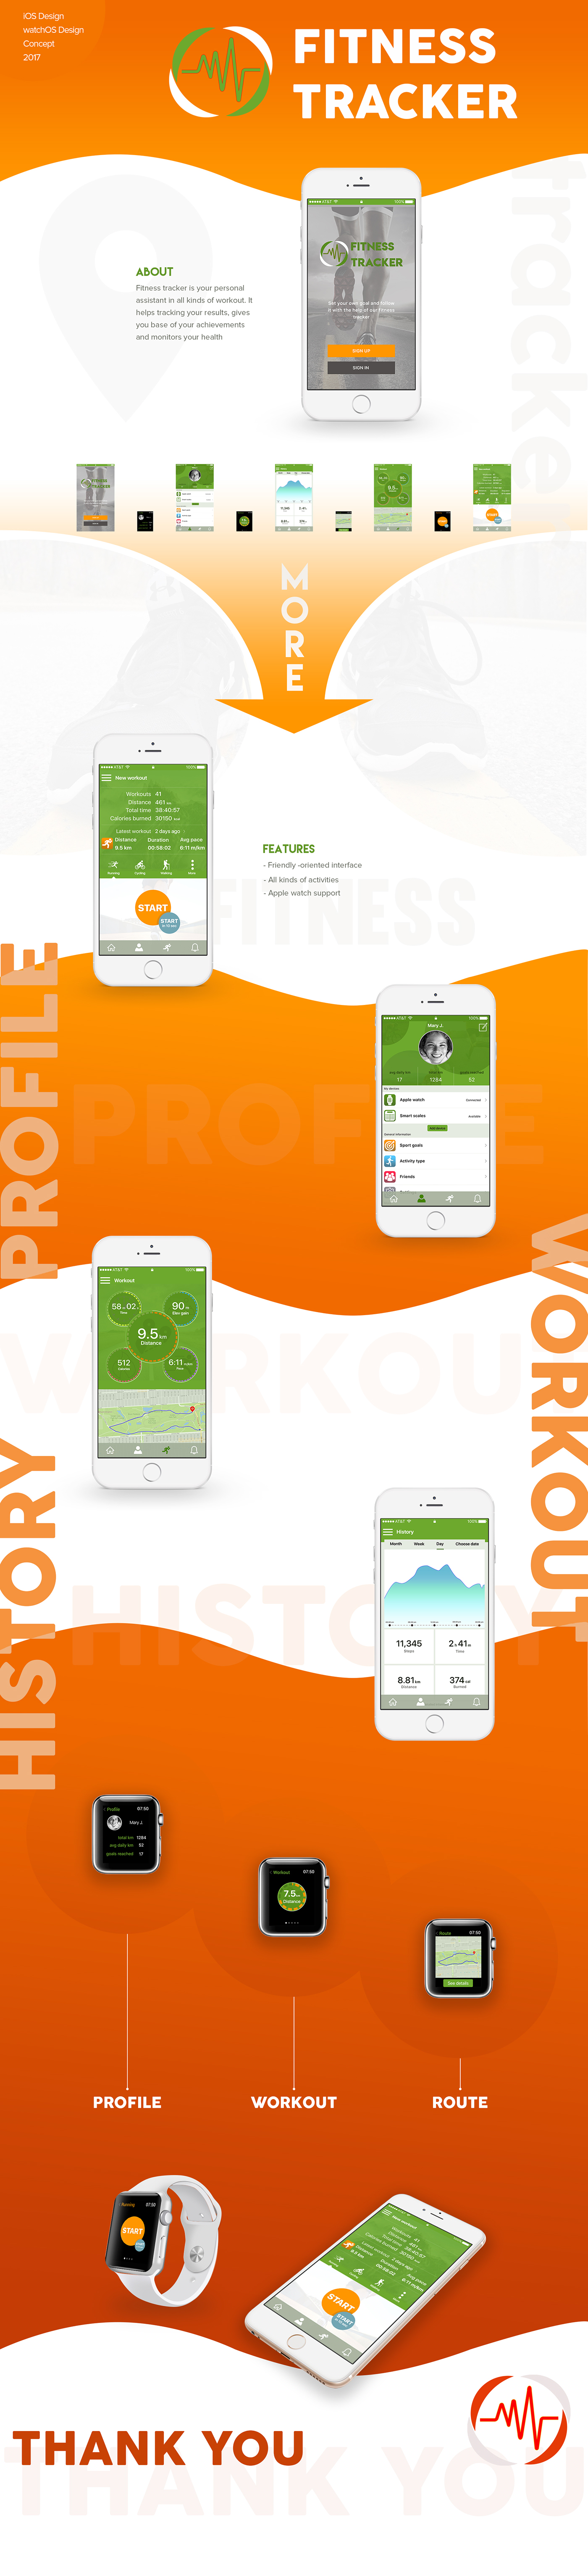 fitness tracker application ios apple watch ukraine sport run Health